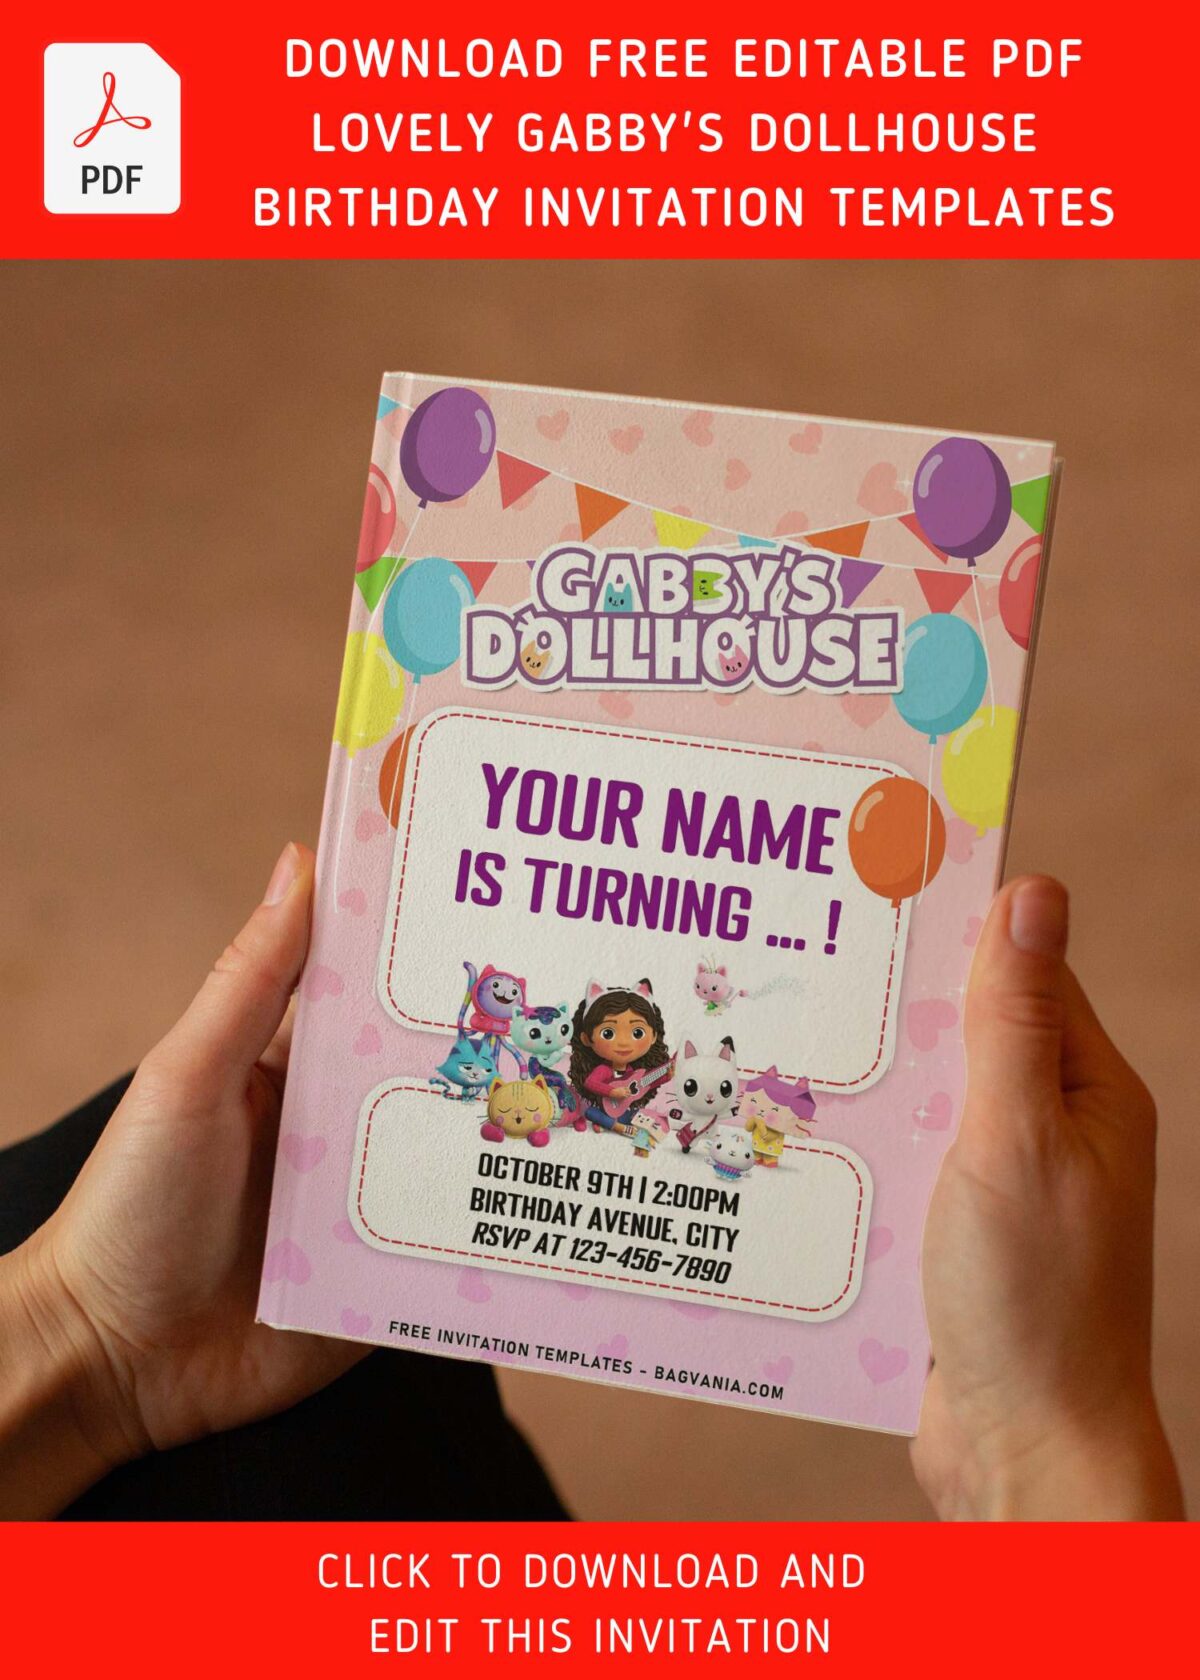 (Free Editable PDF) Purr-fect Gabby's Dollhouse Birthday Invitation Templates with cute DJ Catnip